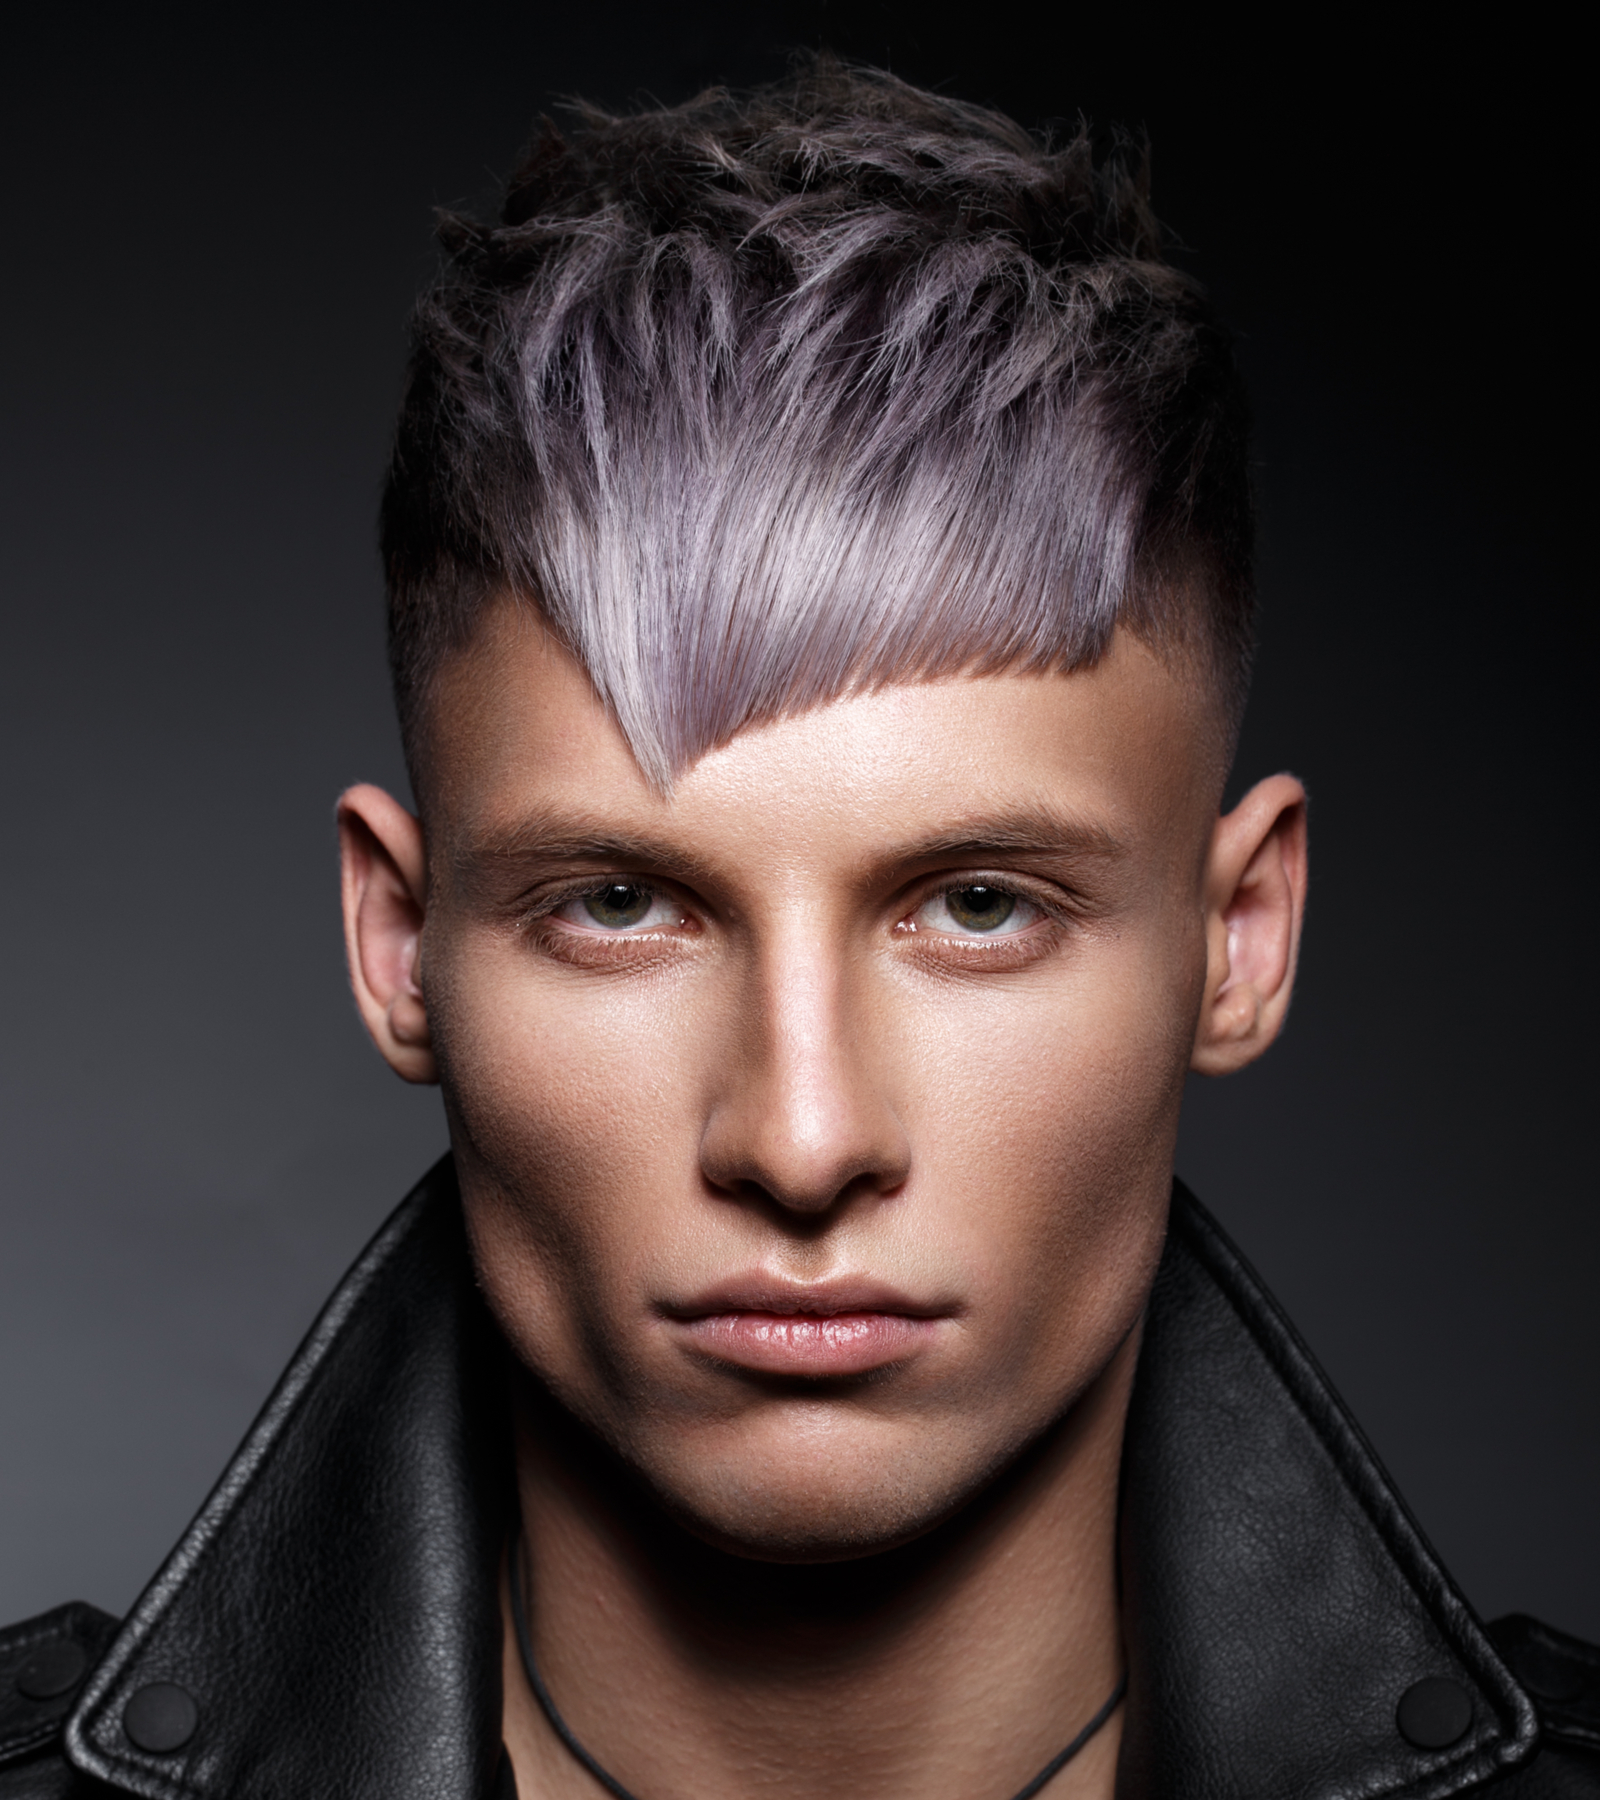 Metallic Violet-Toned Silver hair color idea for men